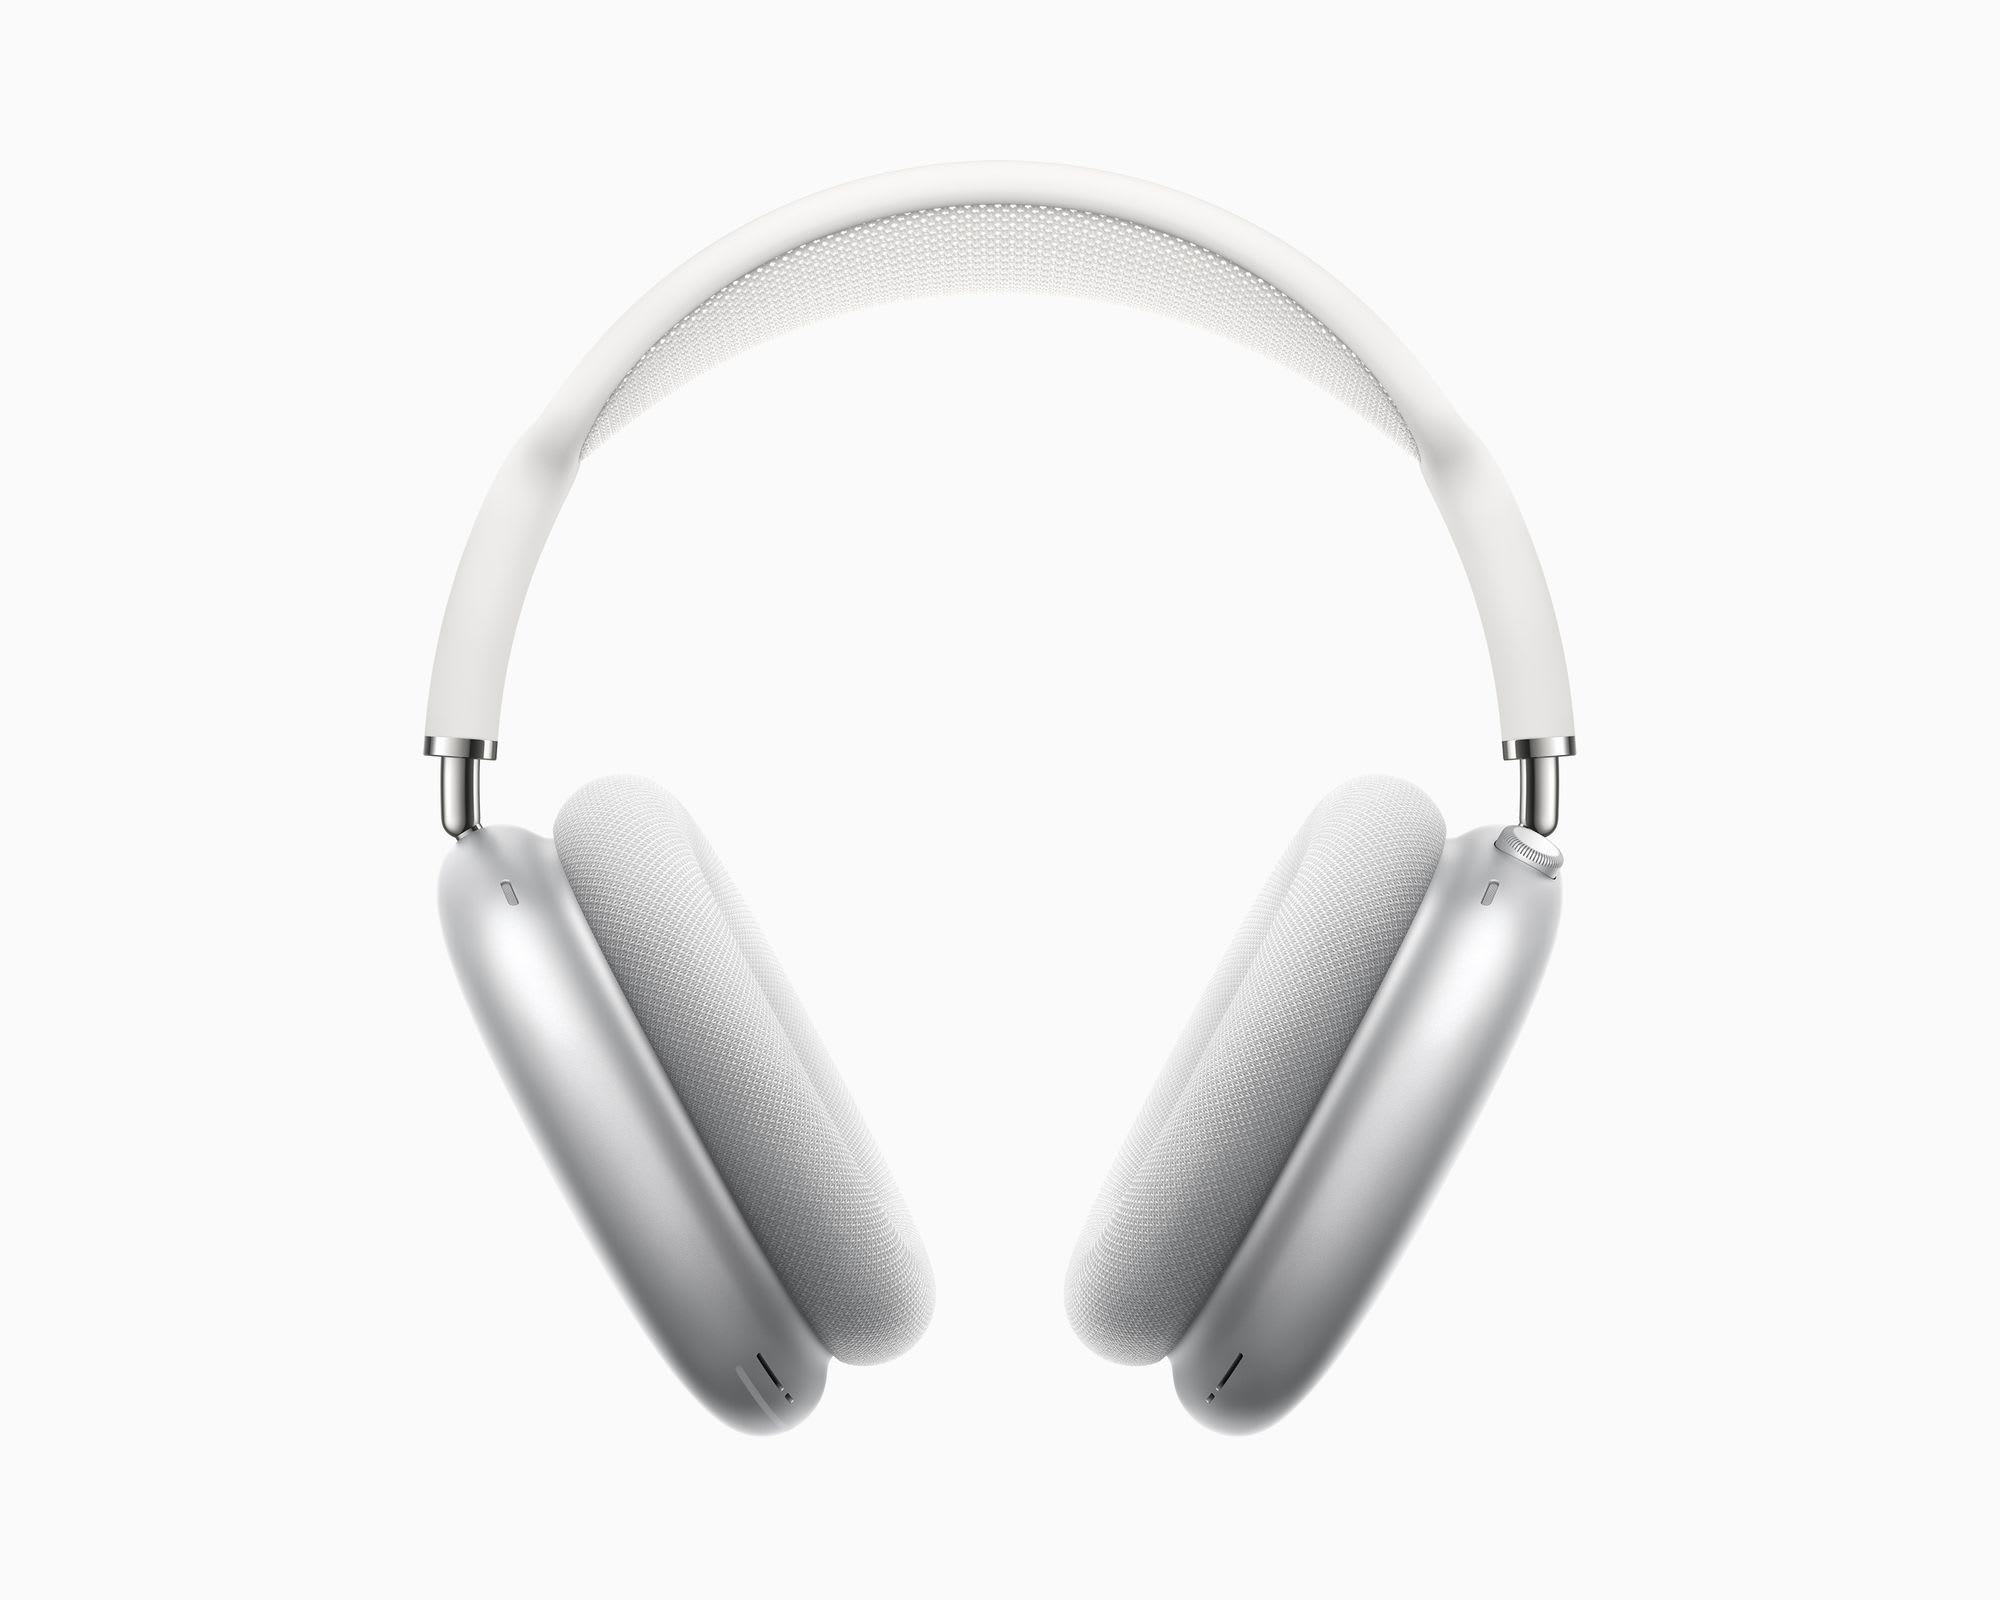 Apple announced a new over-ear headphone "AirPods Max"